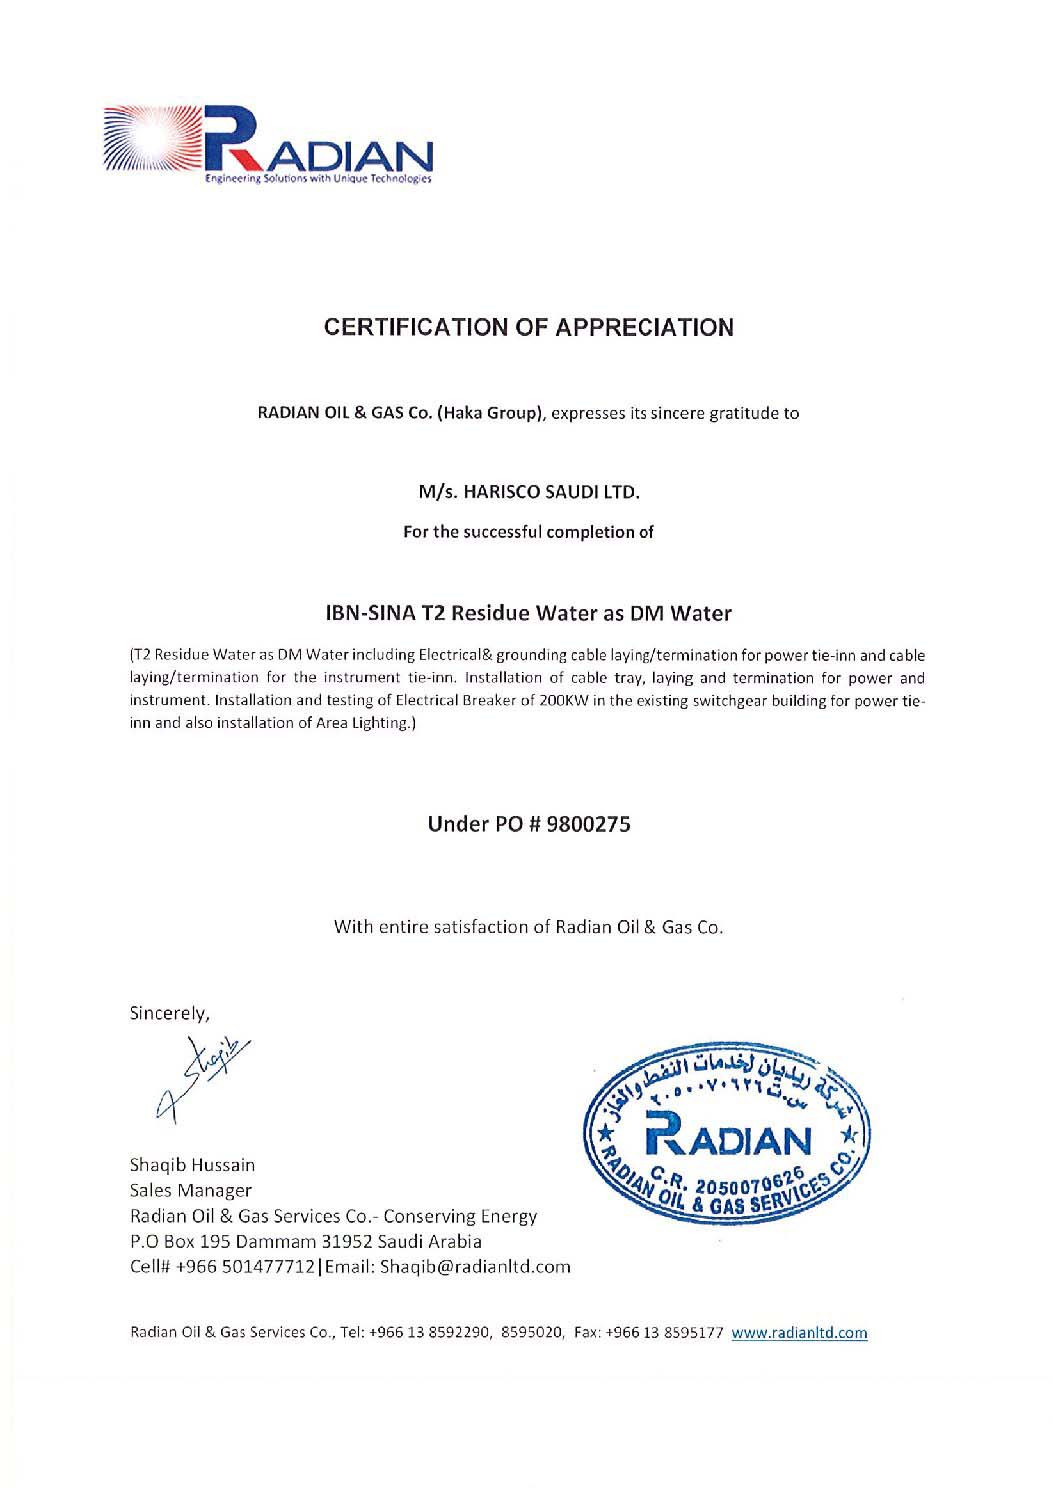 Radian Certificate